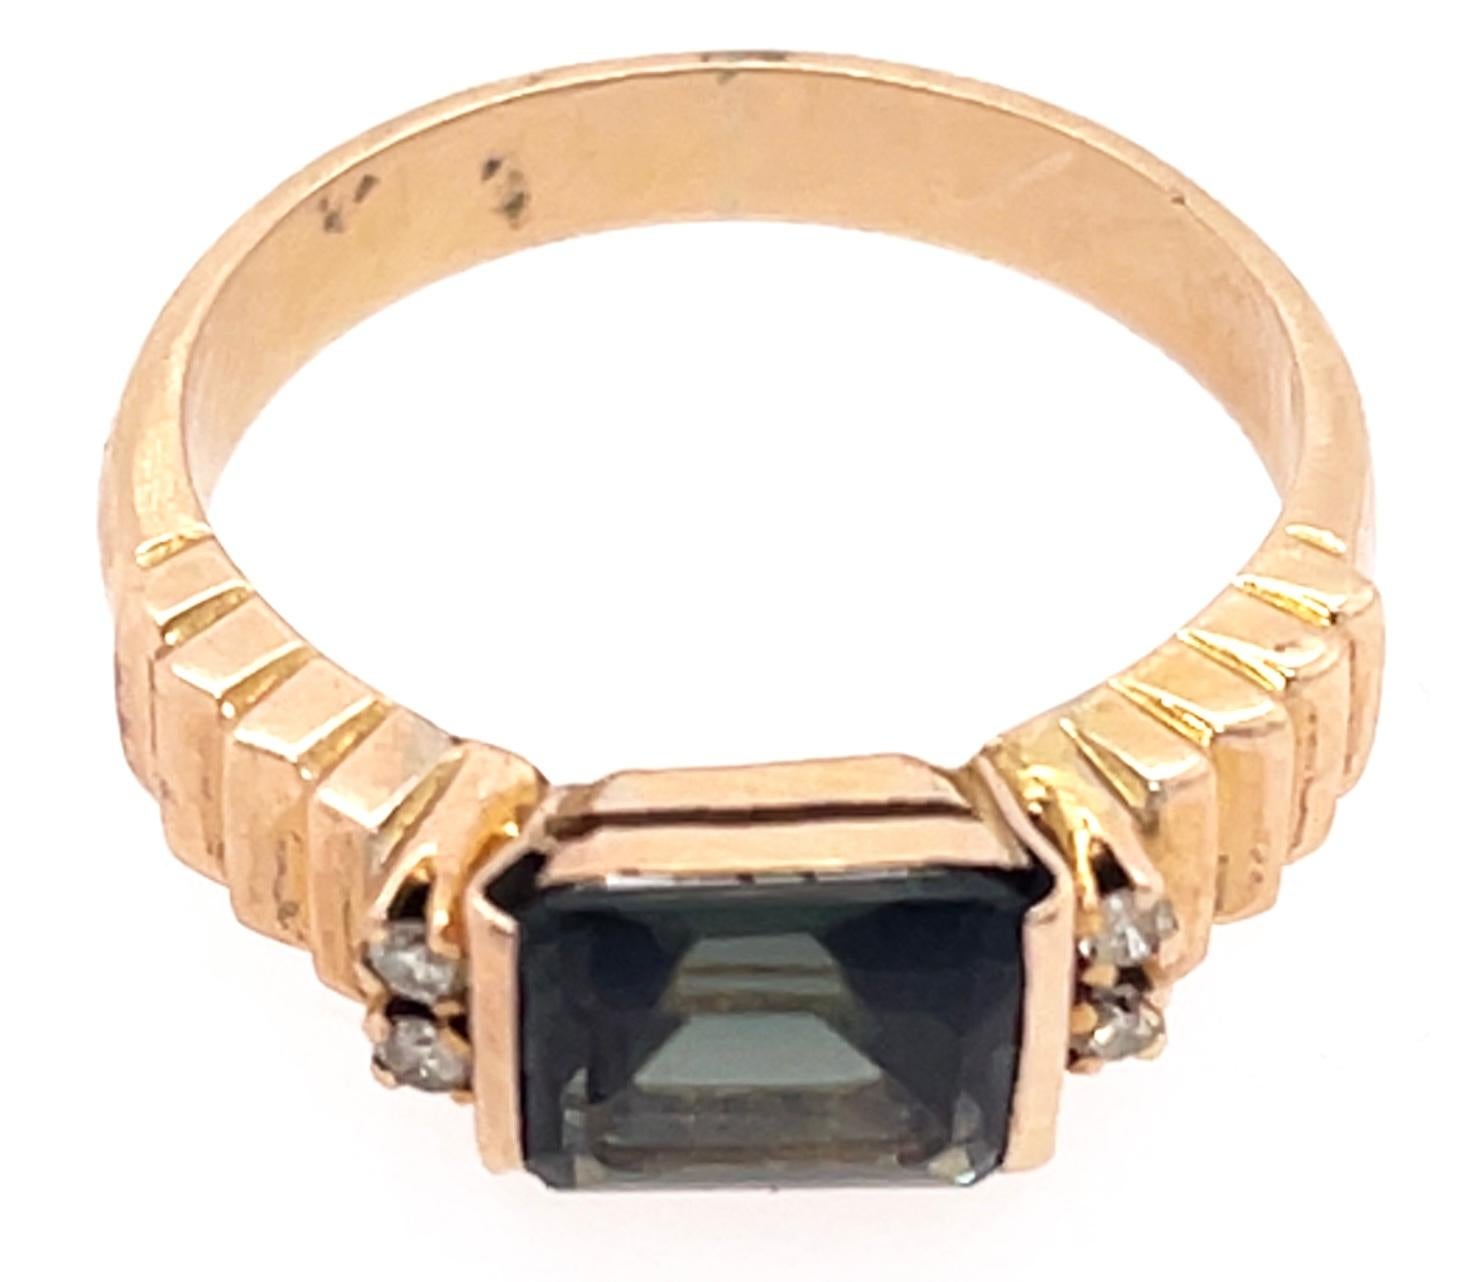 Contemporary 14 Karat Yellow Gold Ring with Center Emerald Cut Peridot and Diamonds